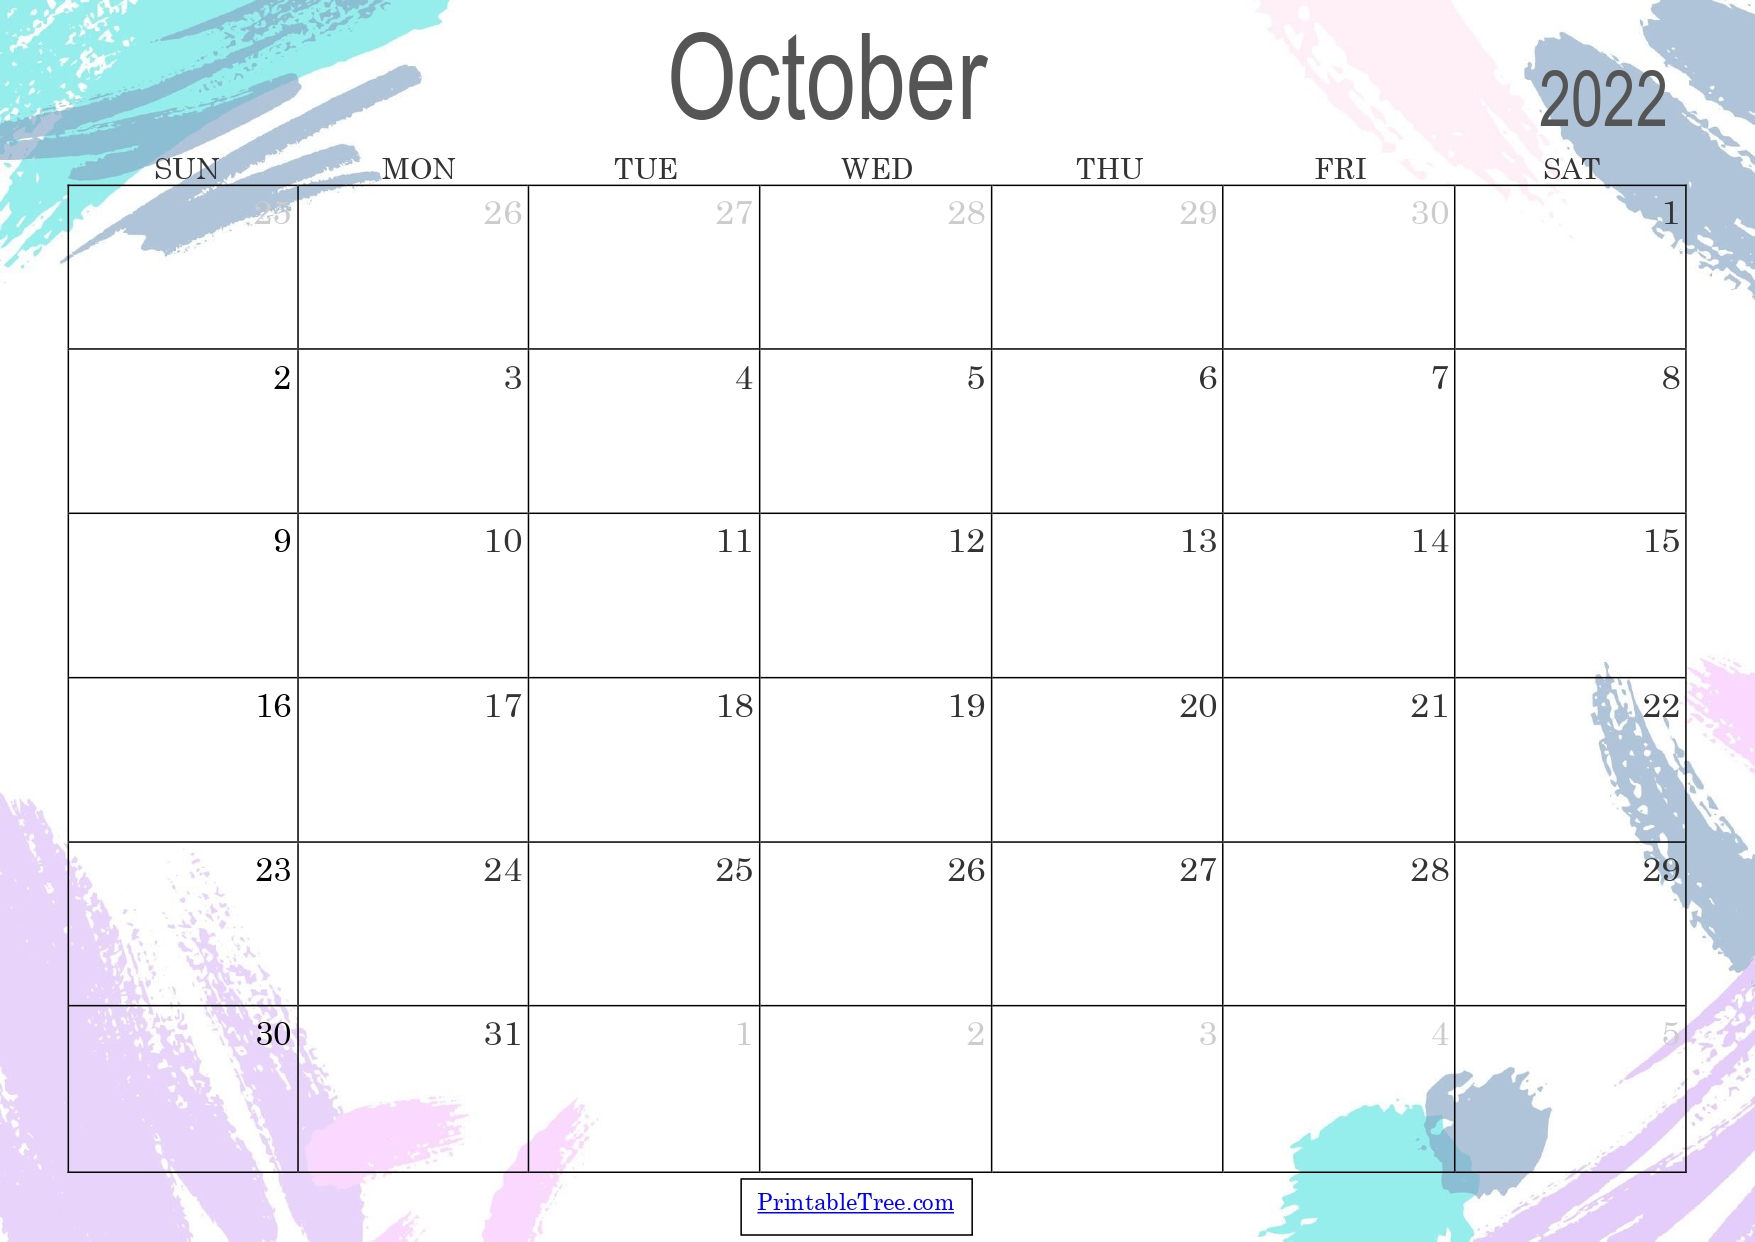 October 2022 Calendar Free Printable October 2022 Calendar Printable Pdf Free Templates With Holidays